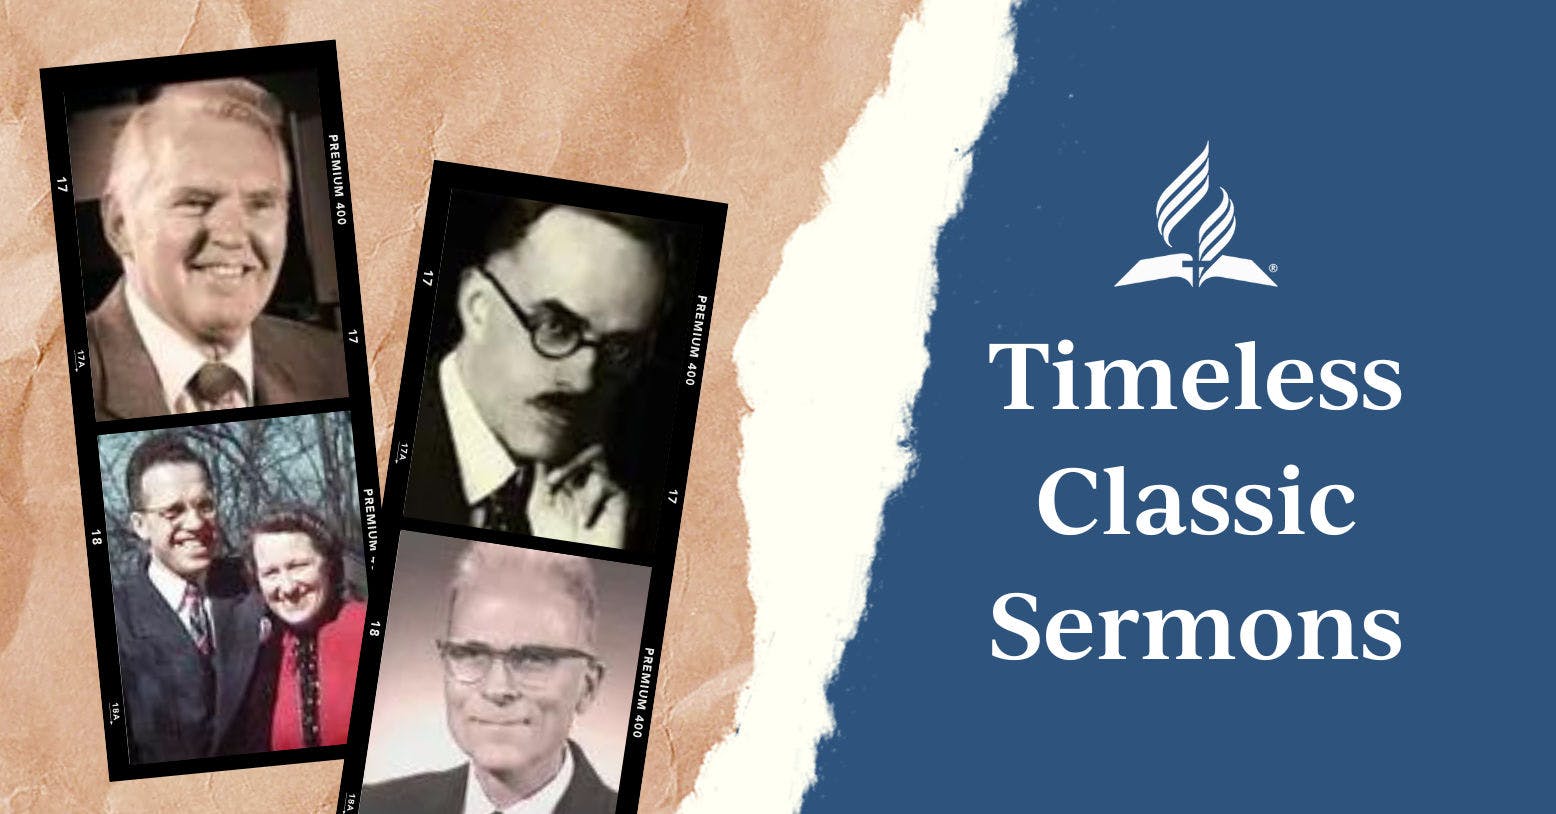 Timeless Classic Sermons